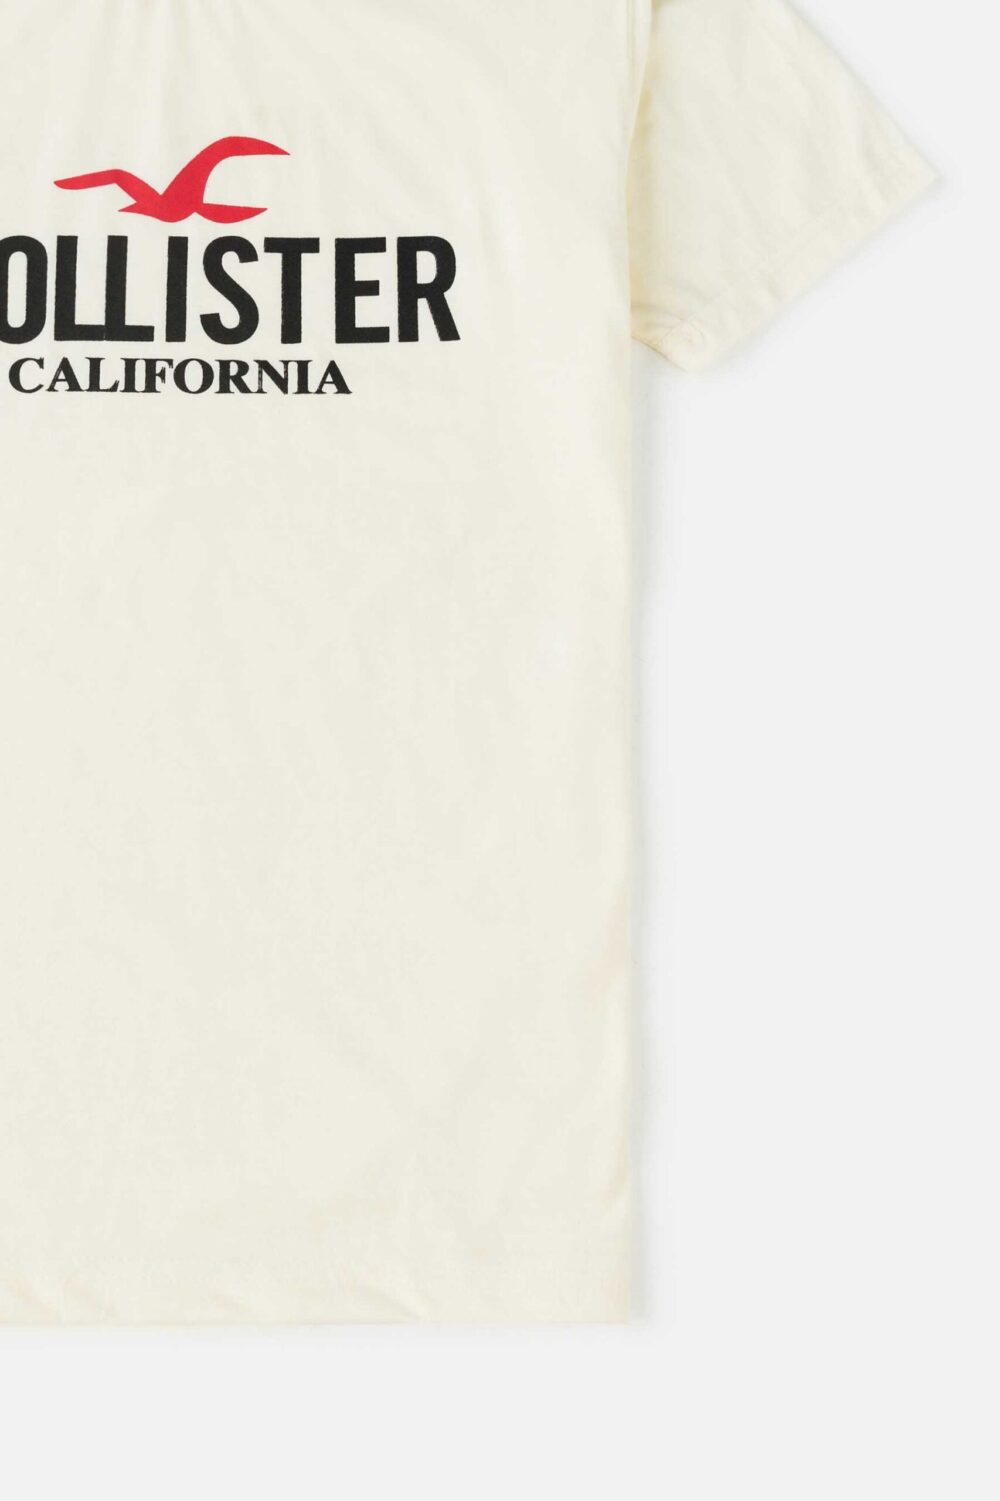 Holister Cotton Print T Shirt – Ivory White